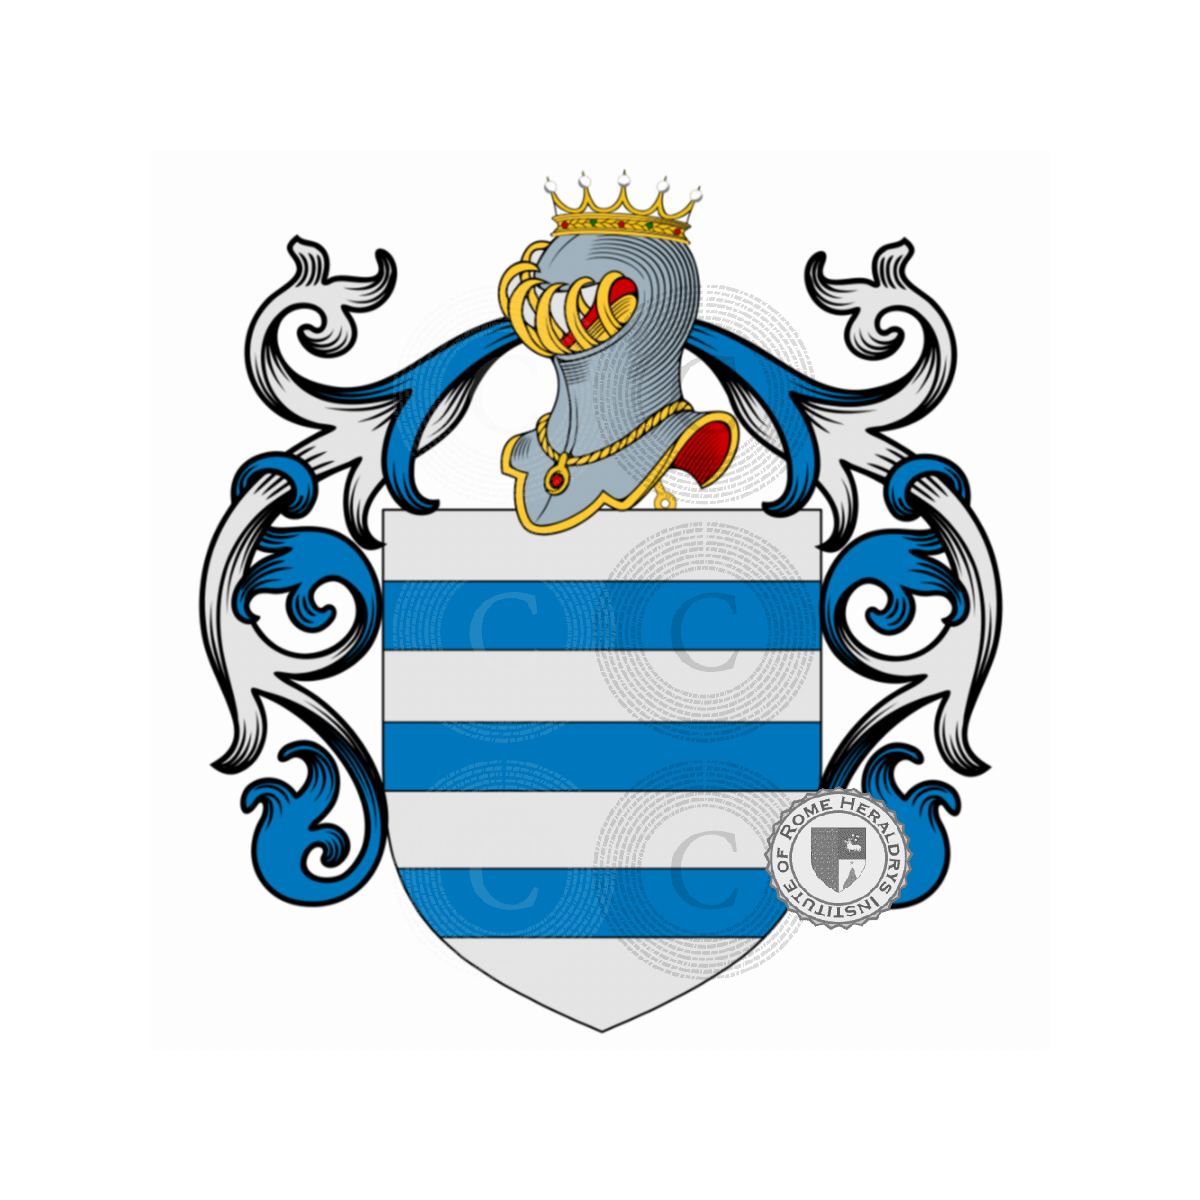 Wappen der FamilieAlitto, d'Alitto